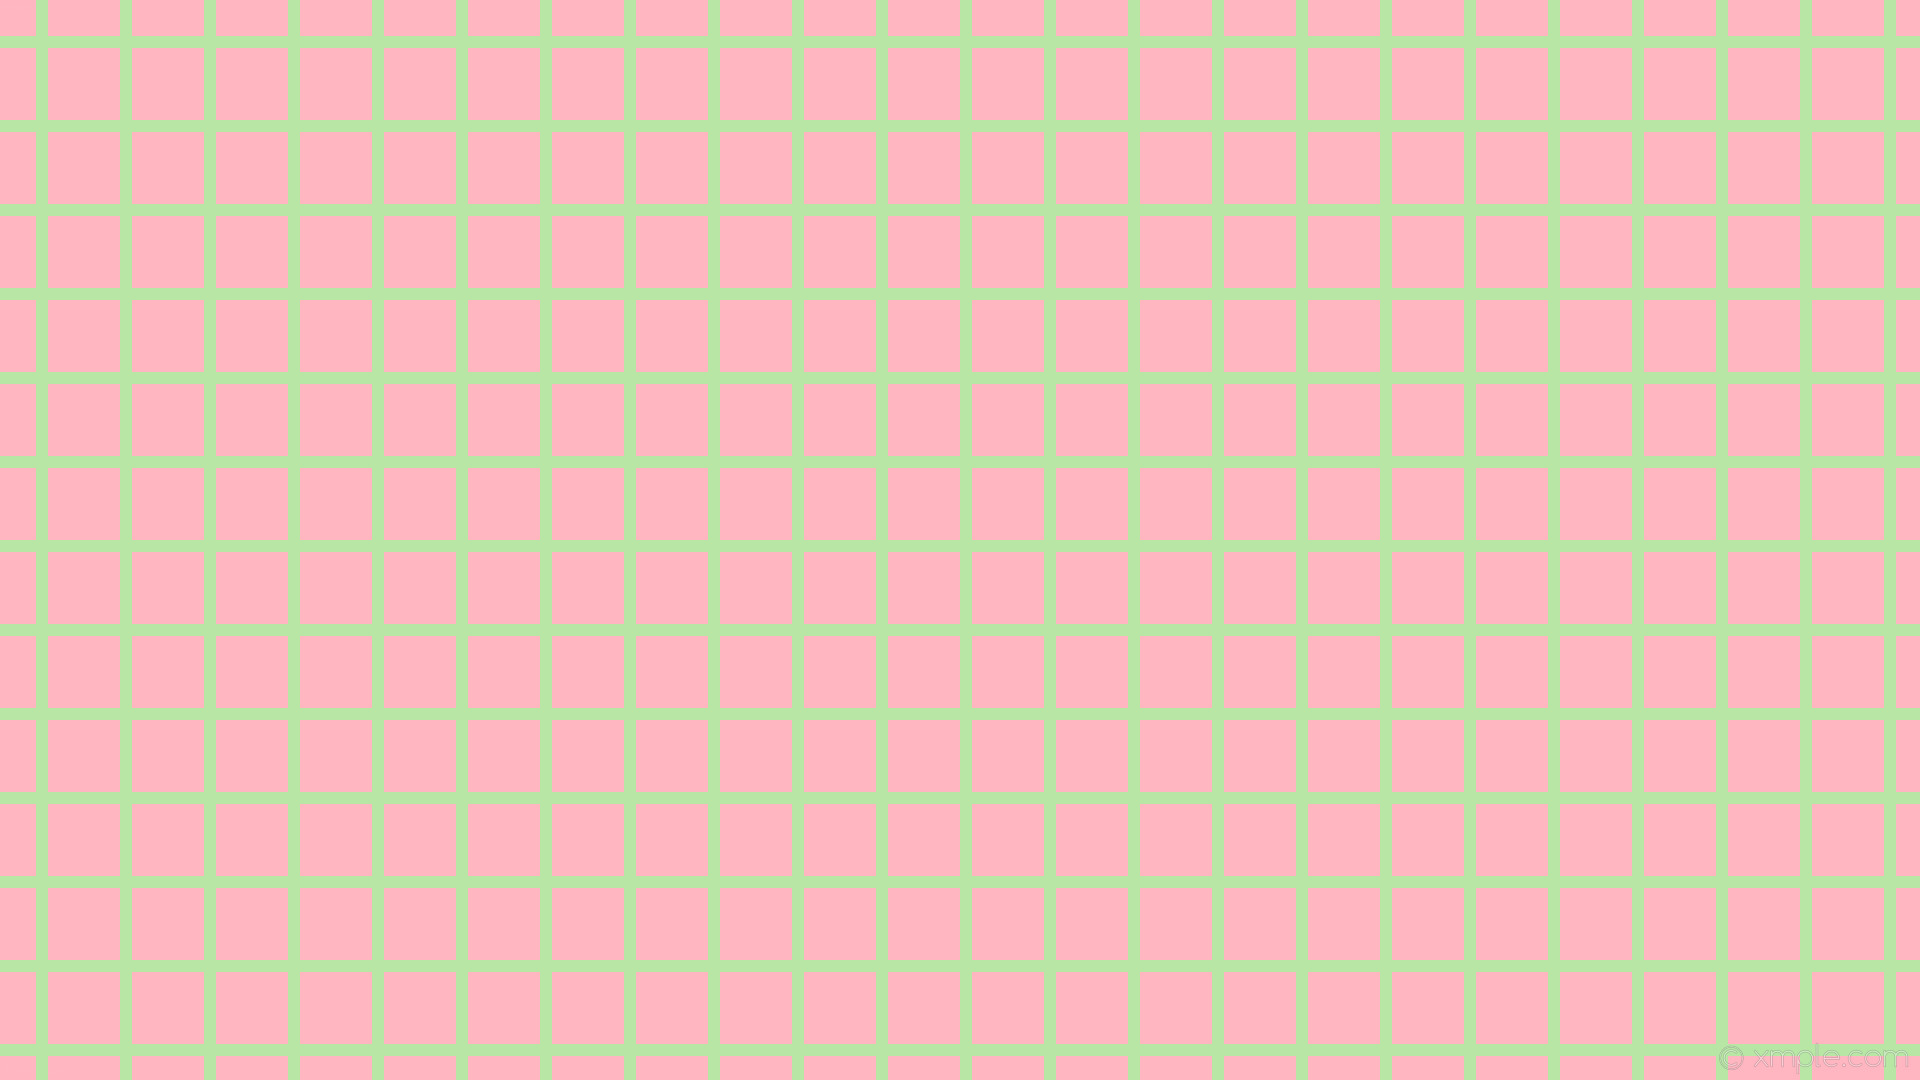 1920x1080 wallpaper pink graph paper green grid light pink pale green #ffb6c1 #98fb98  0Â°